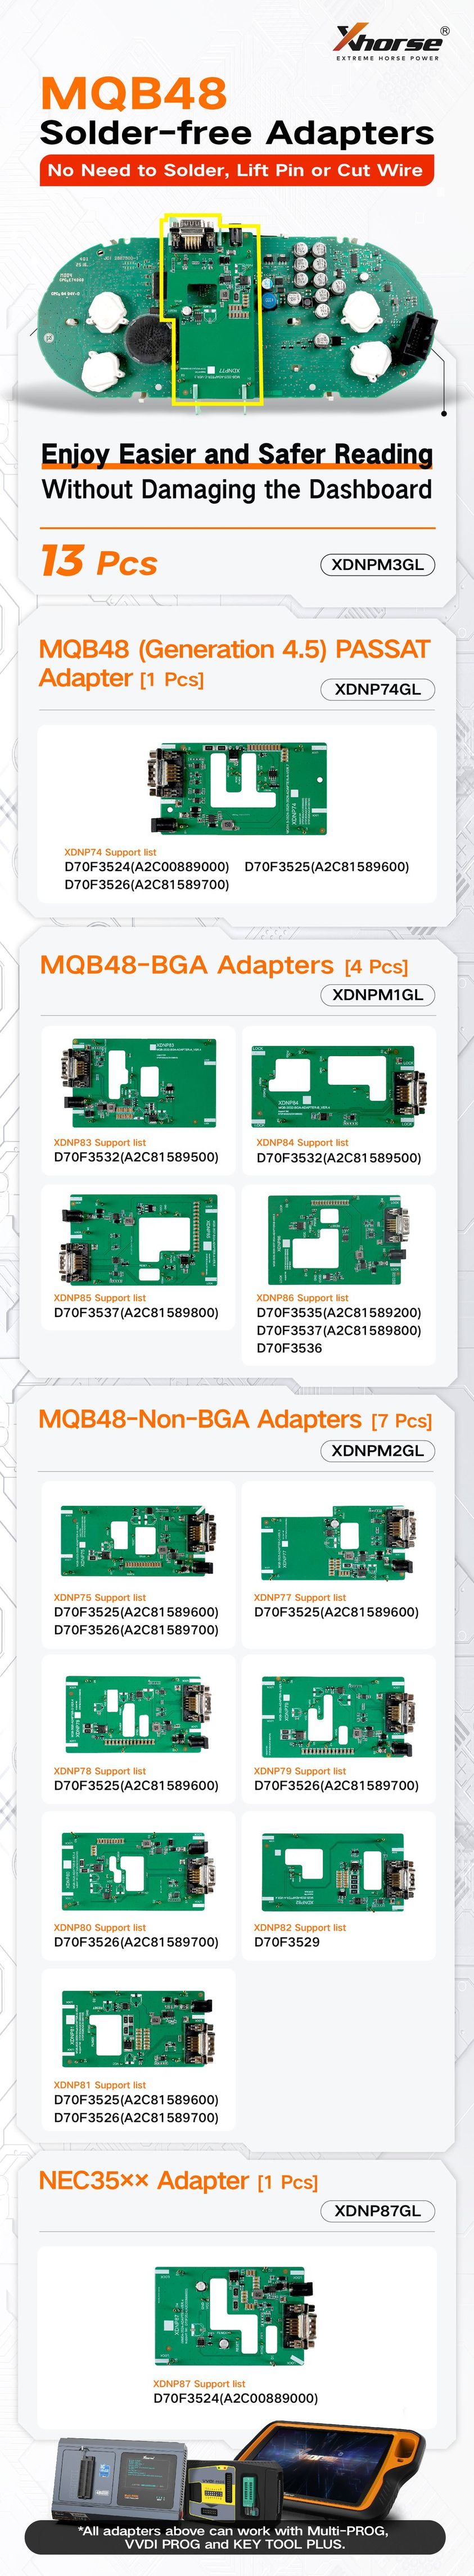 MQB48 Adapter